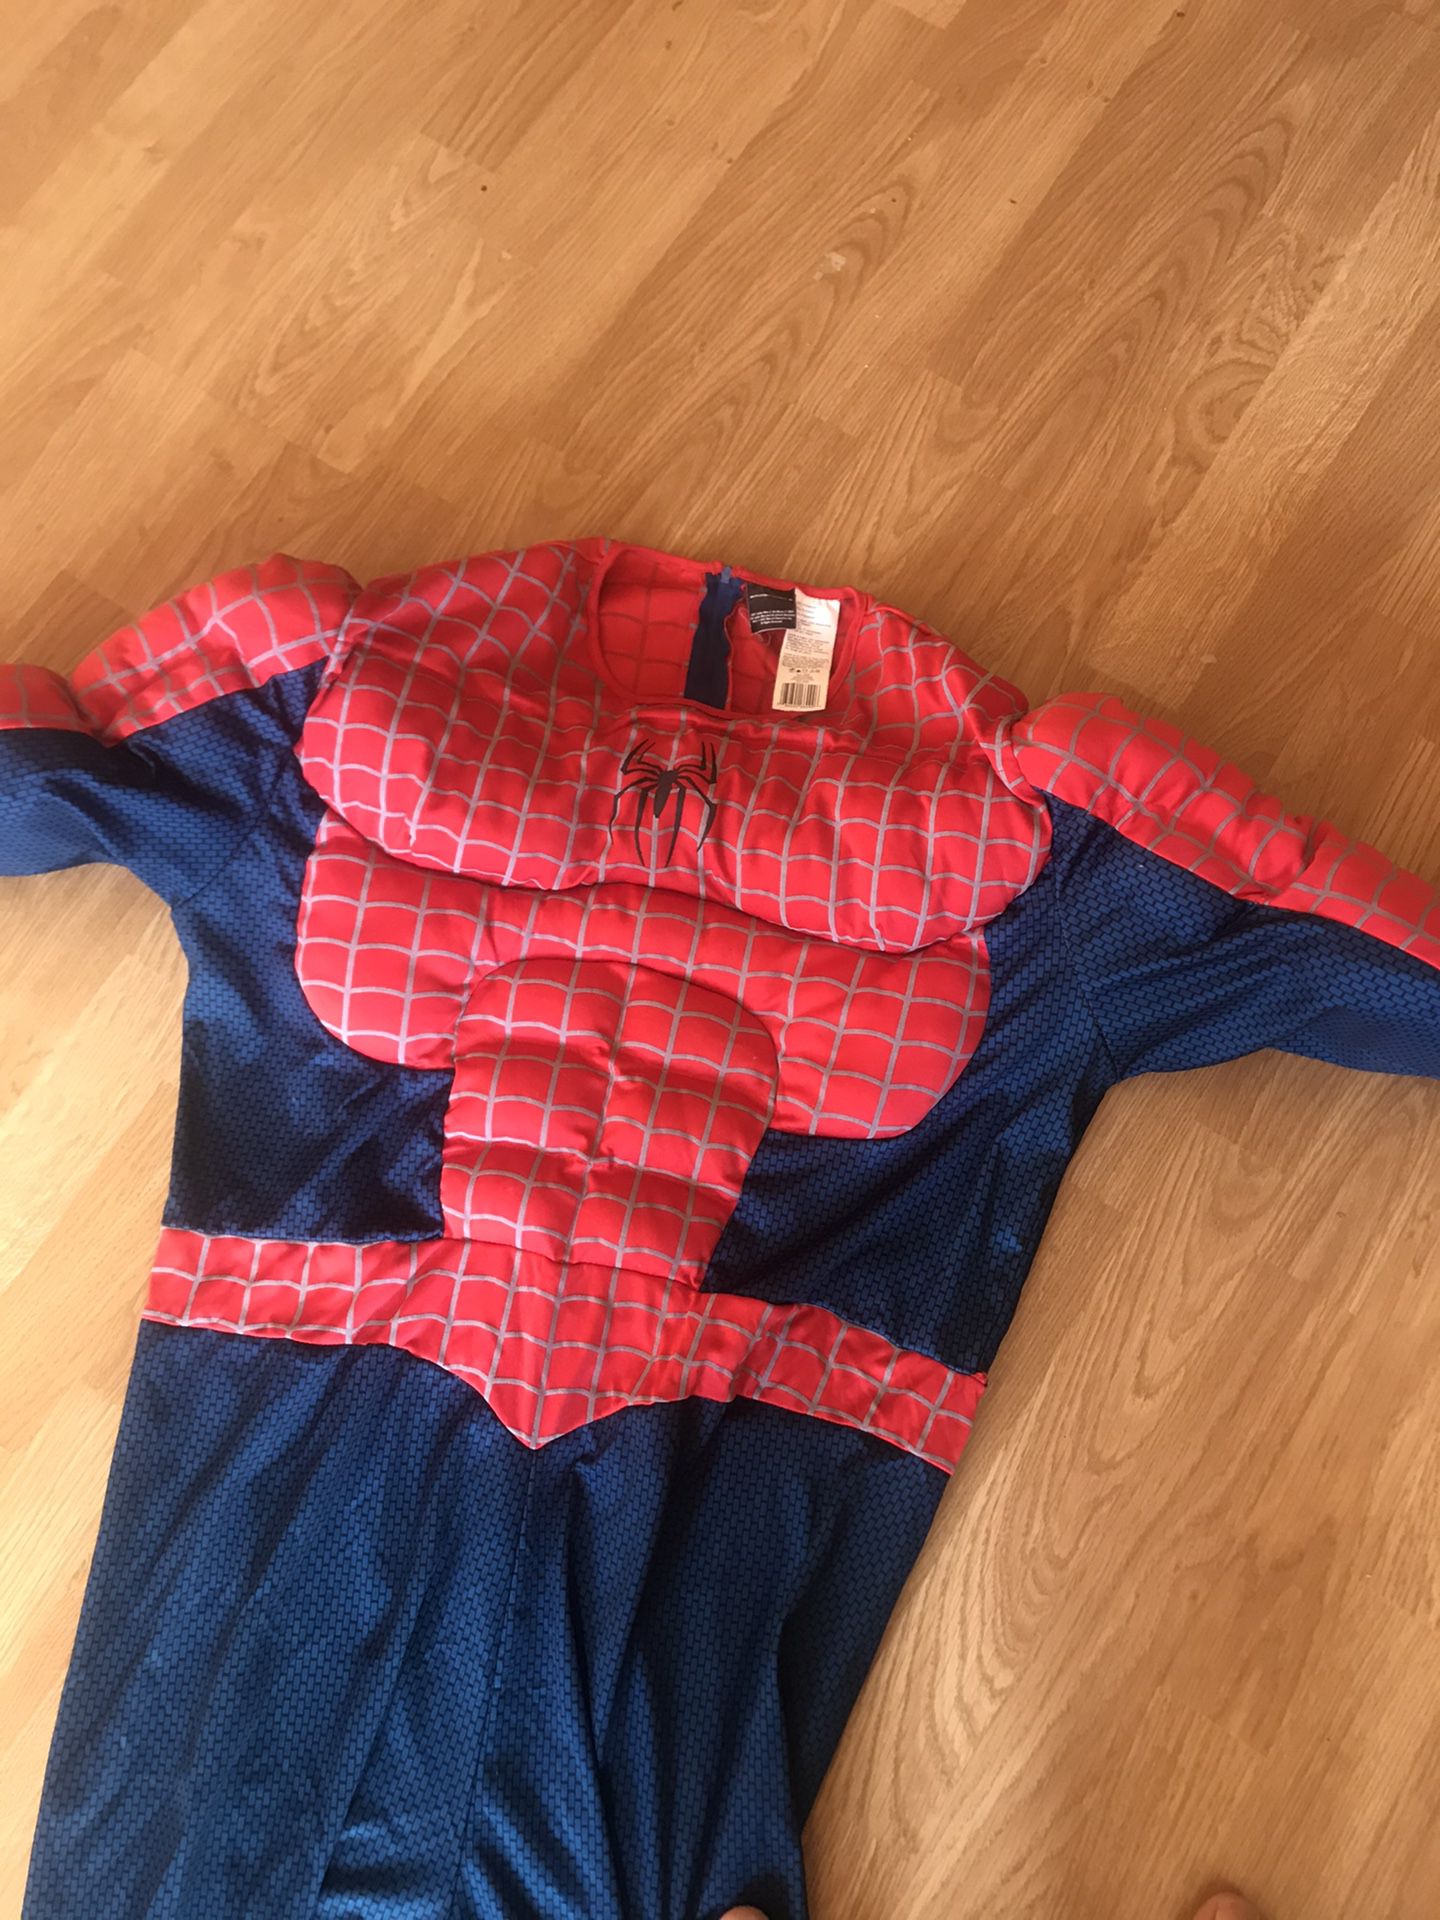 Spider-Man custom Adult XL size